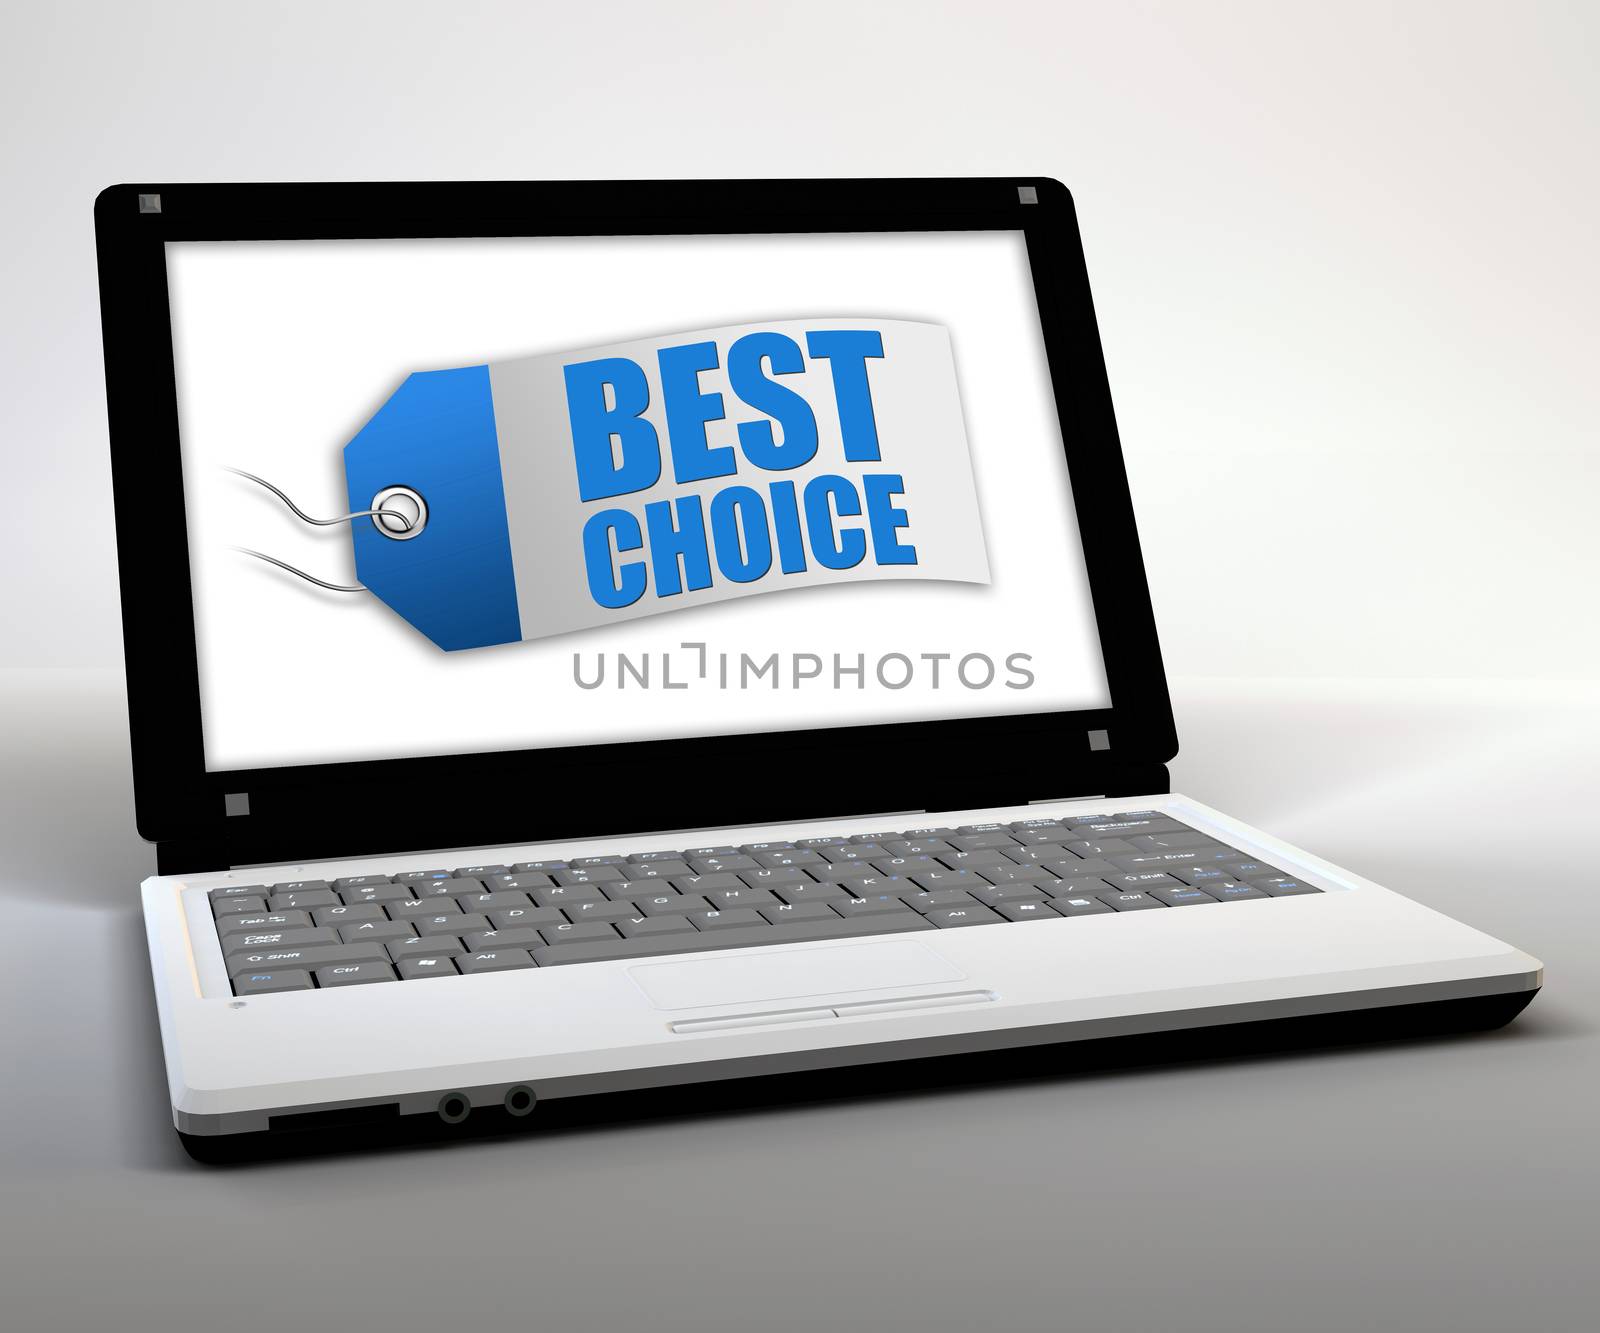 Mobile Thin Client "Best Choice Label"